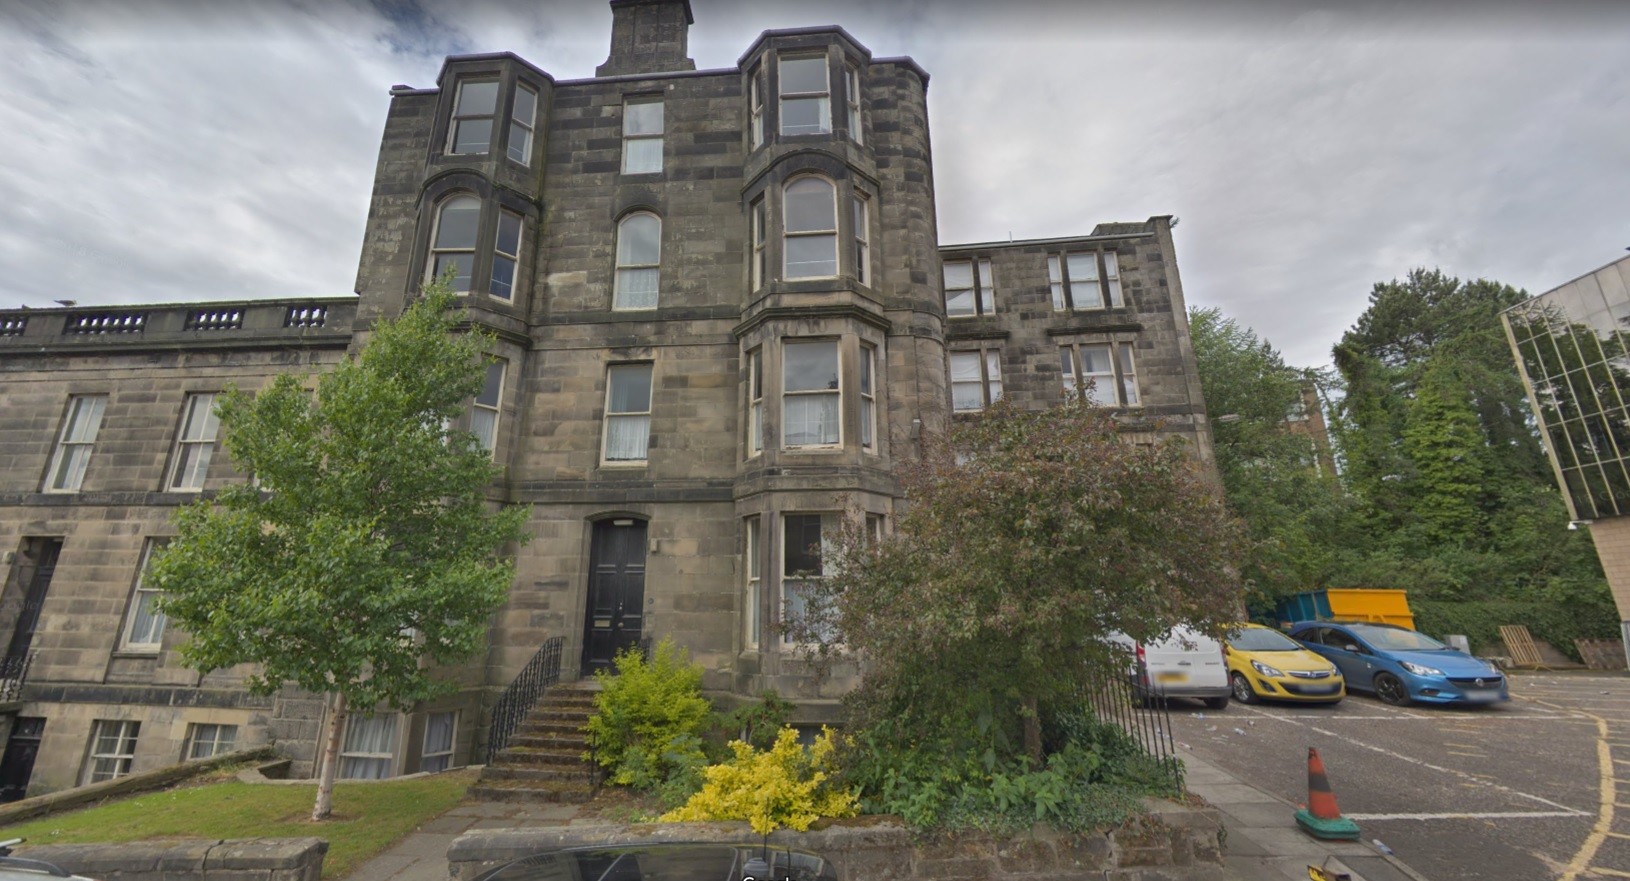 University plans to demolish historic Dundee tenement buildings